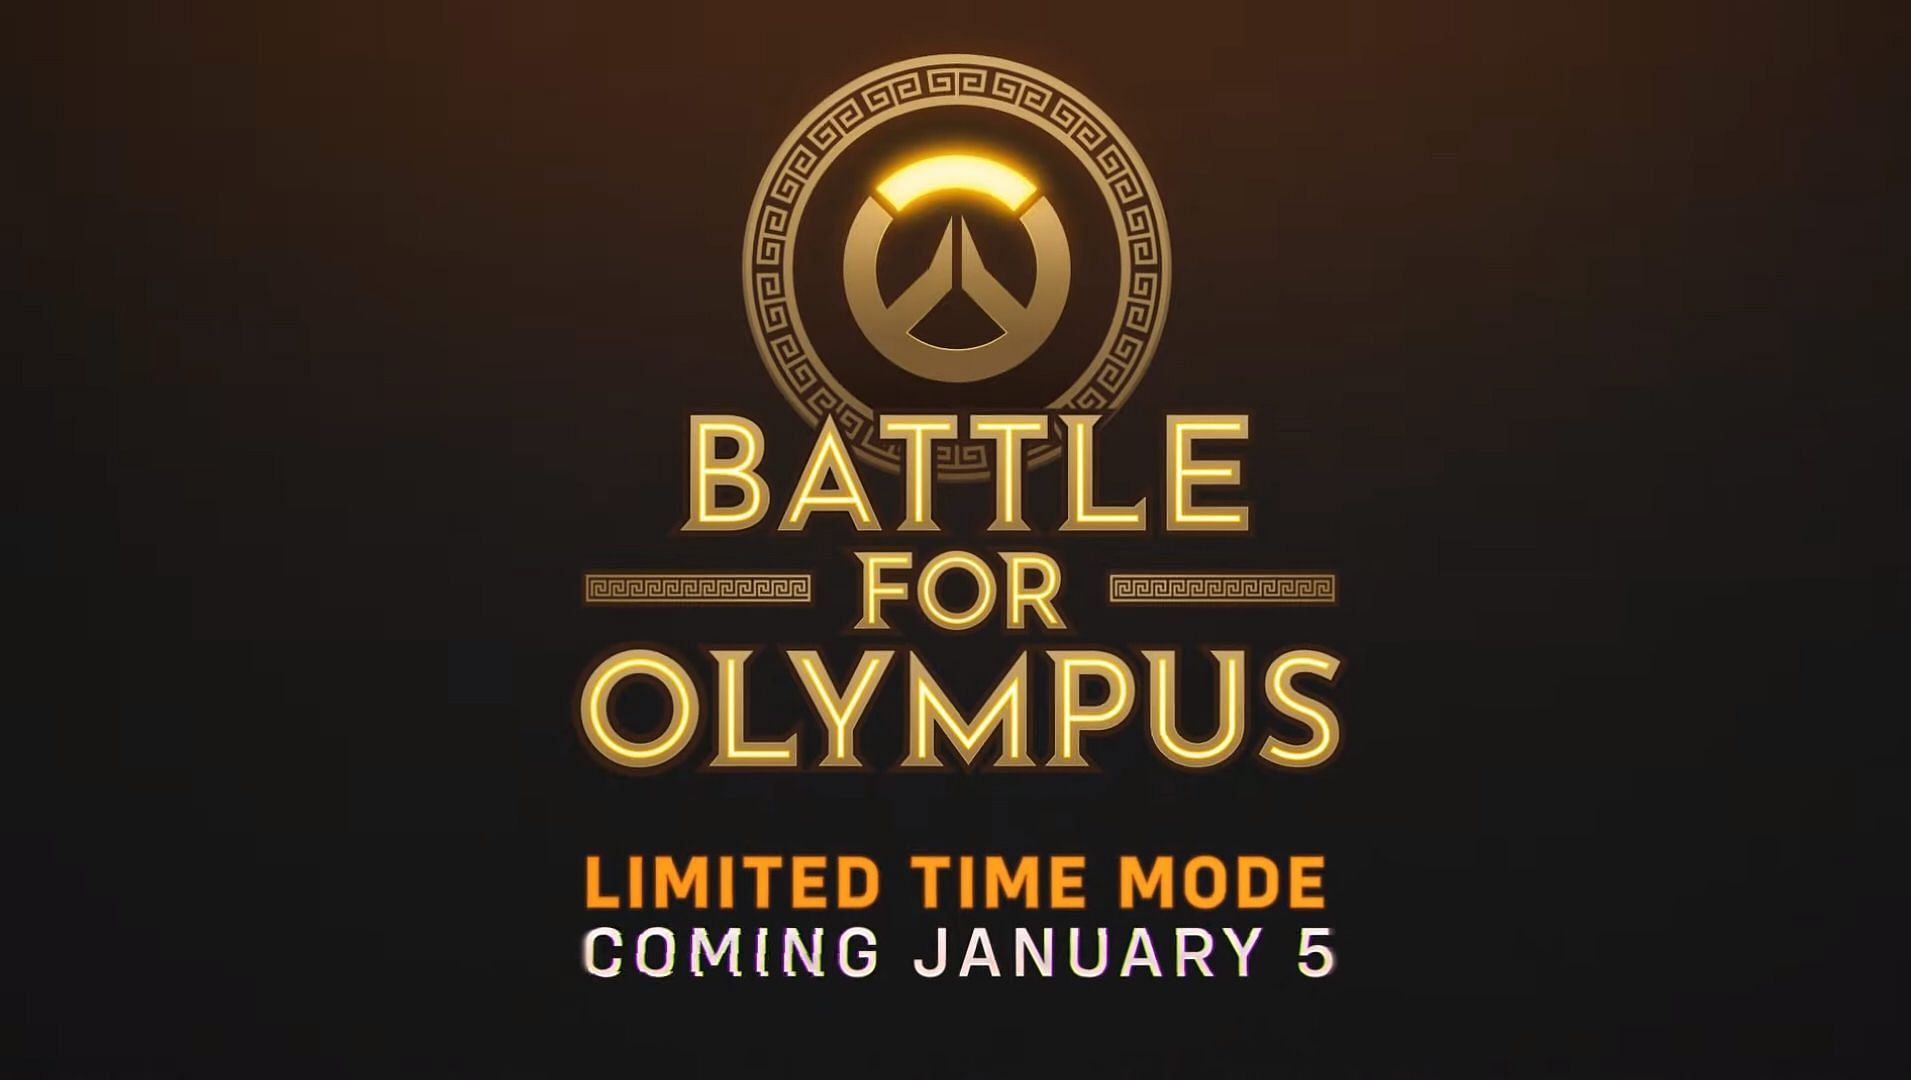 Battle for Olympus (Image via Blizzard Entertainment)